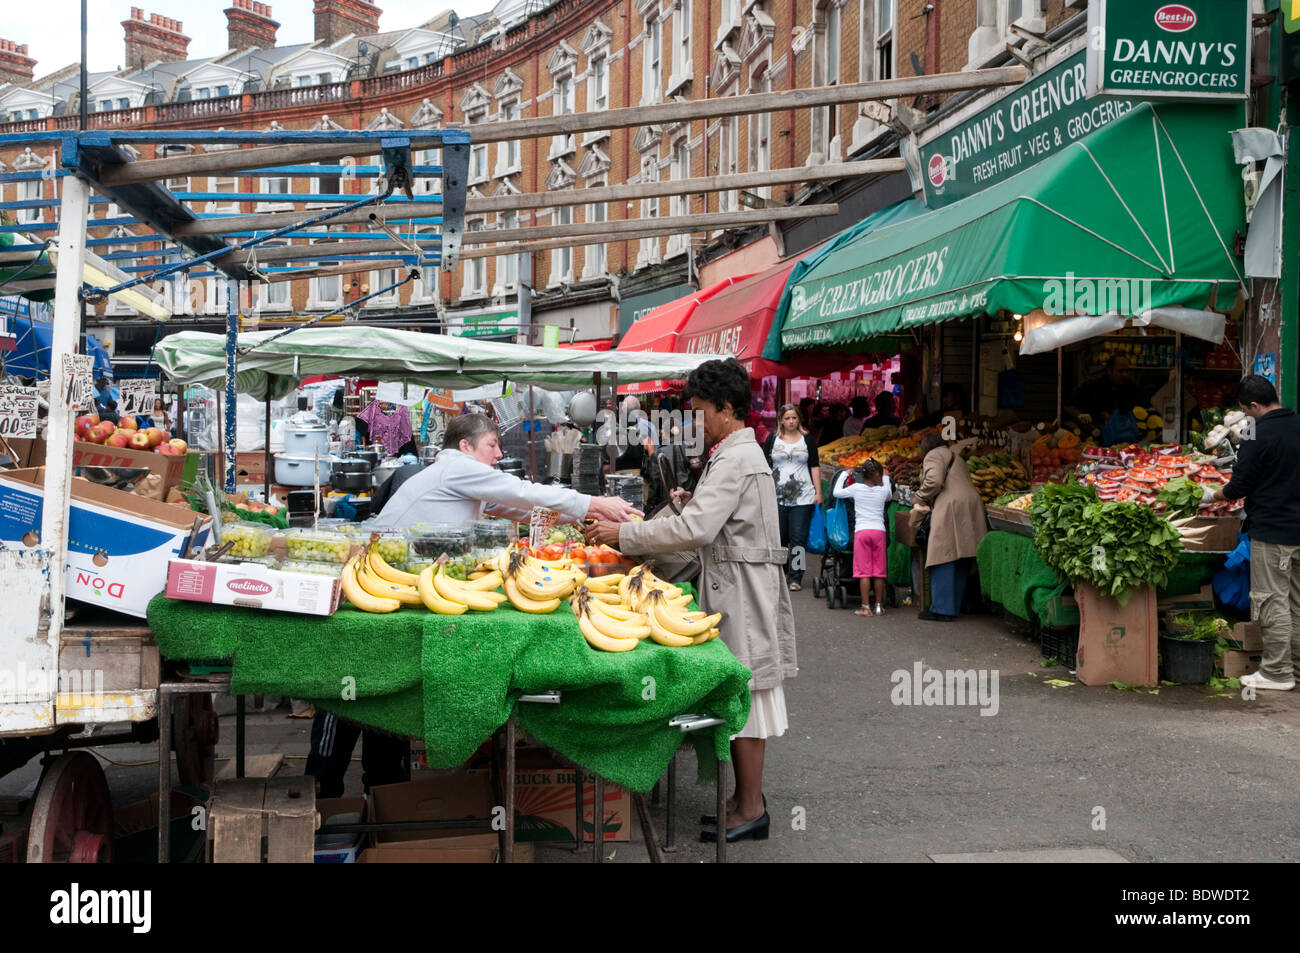 Fruit and vegetable stall on Electric Avenue street market, Brixton, London, England, UK Stock Photo